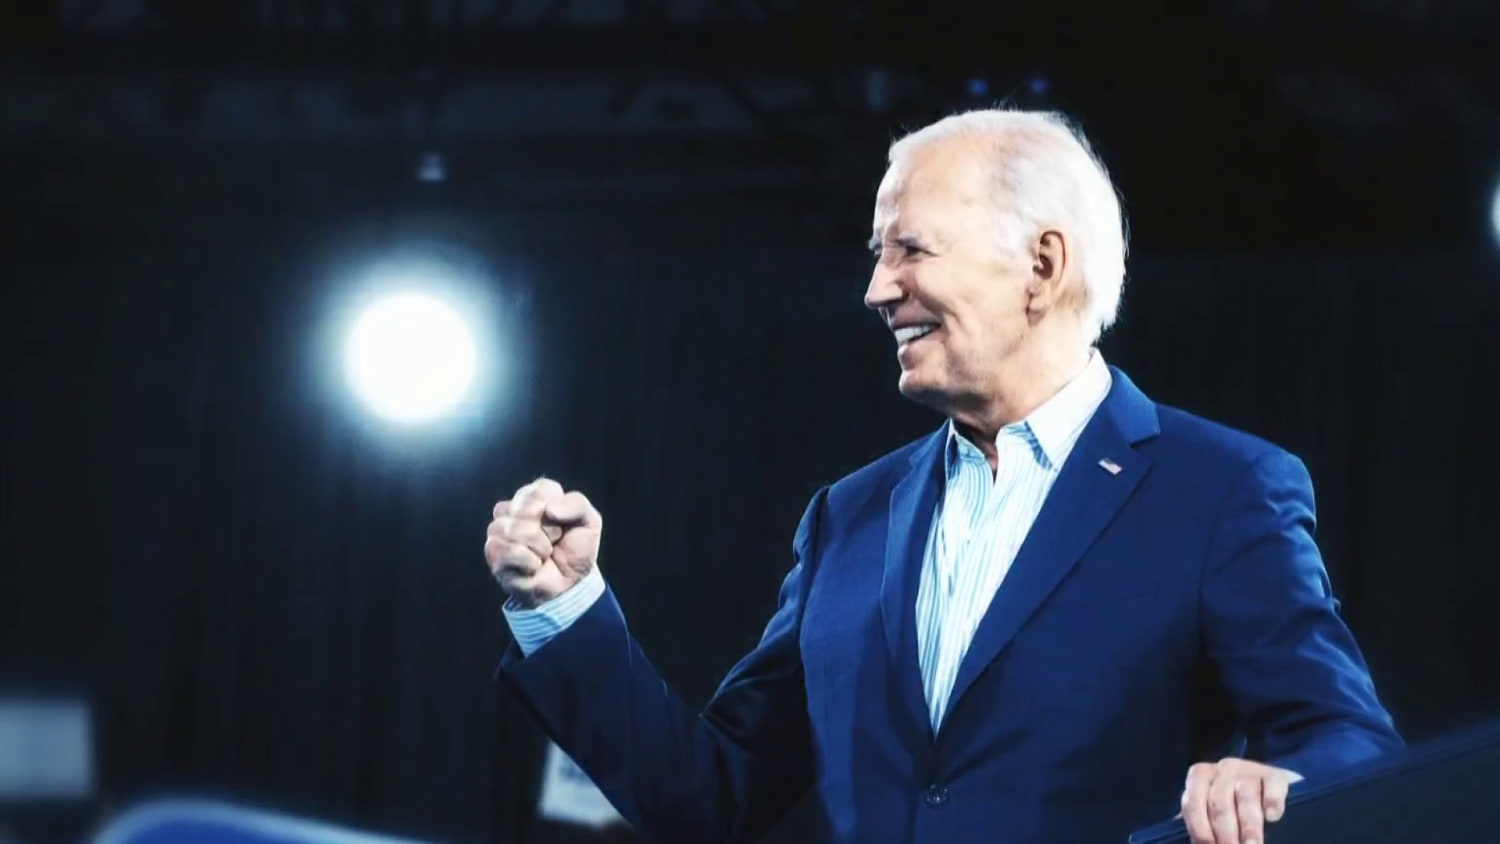 Pressure grows on Biden campaign after debate disaster